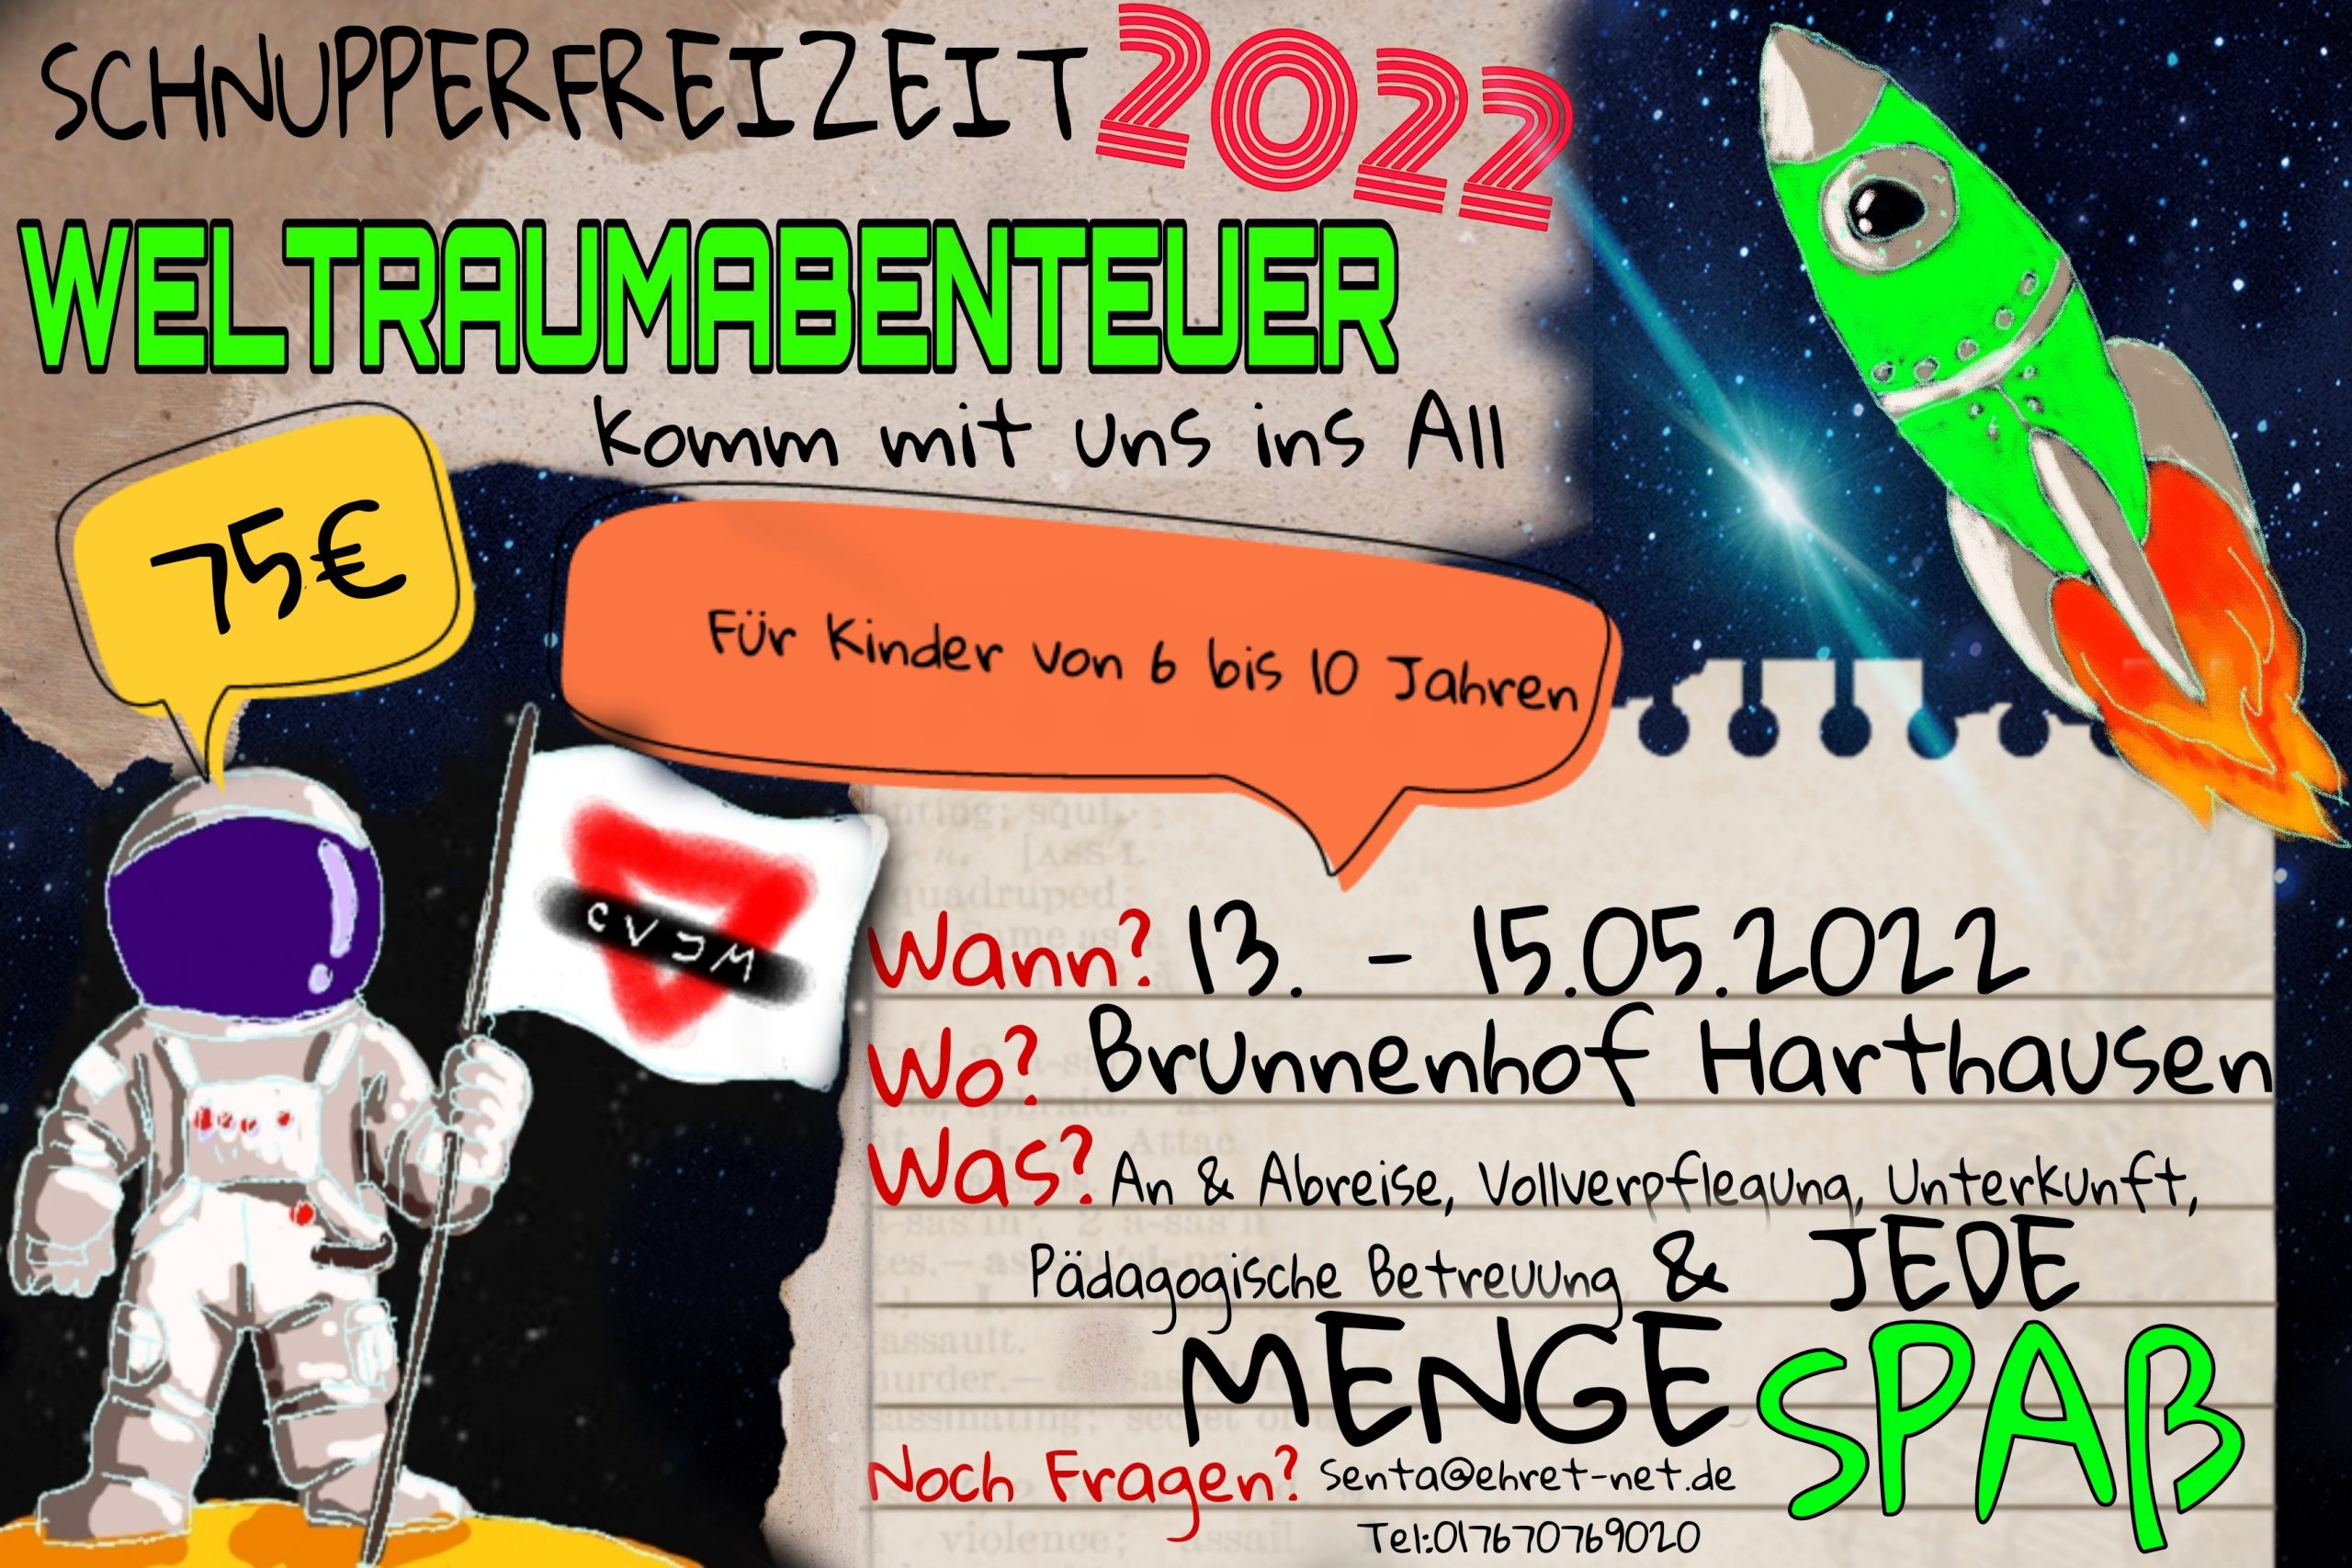 You are currently viewing Schnupperfreizeit 2022